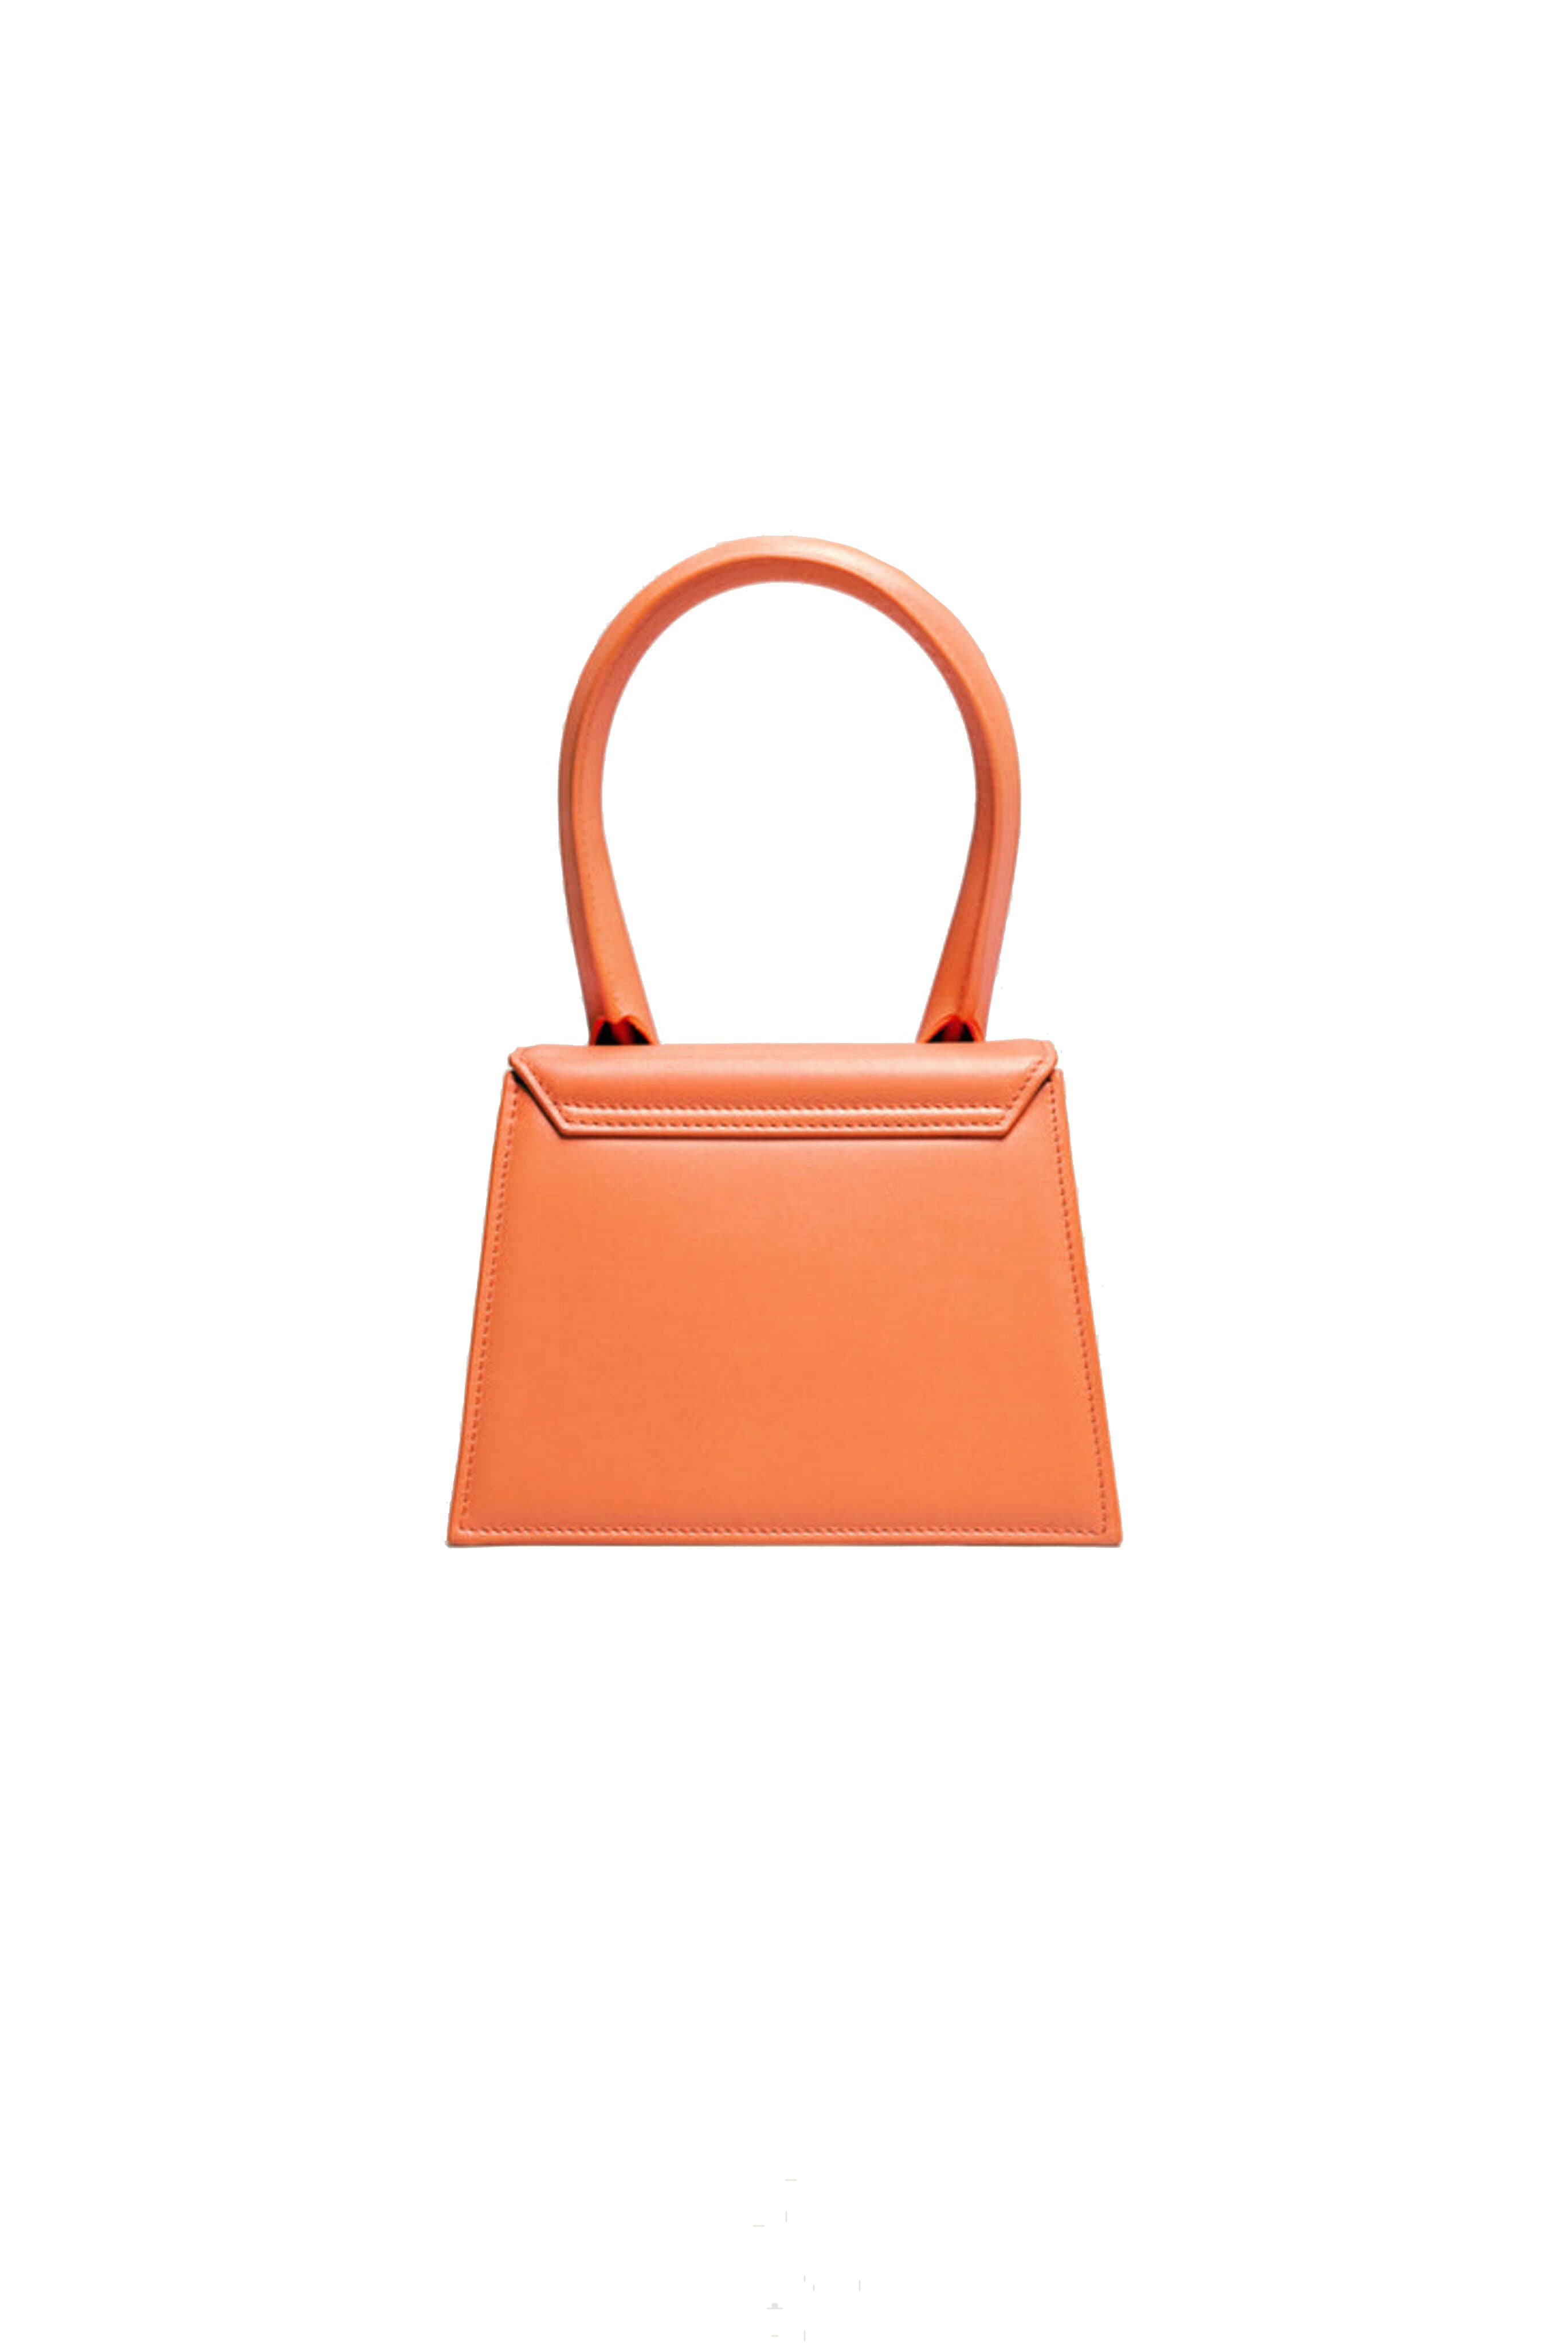 Jacquemus Le Chiquito Long Cordao Top-Handle Bag, Brown, Women's, Handbags & Purses Top Handle Bags